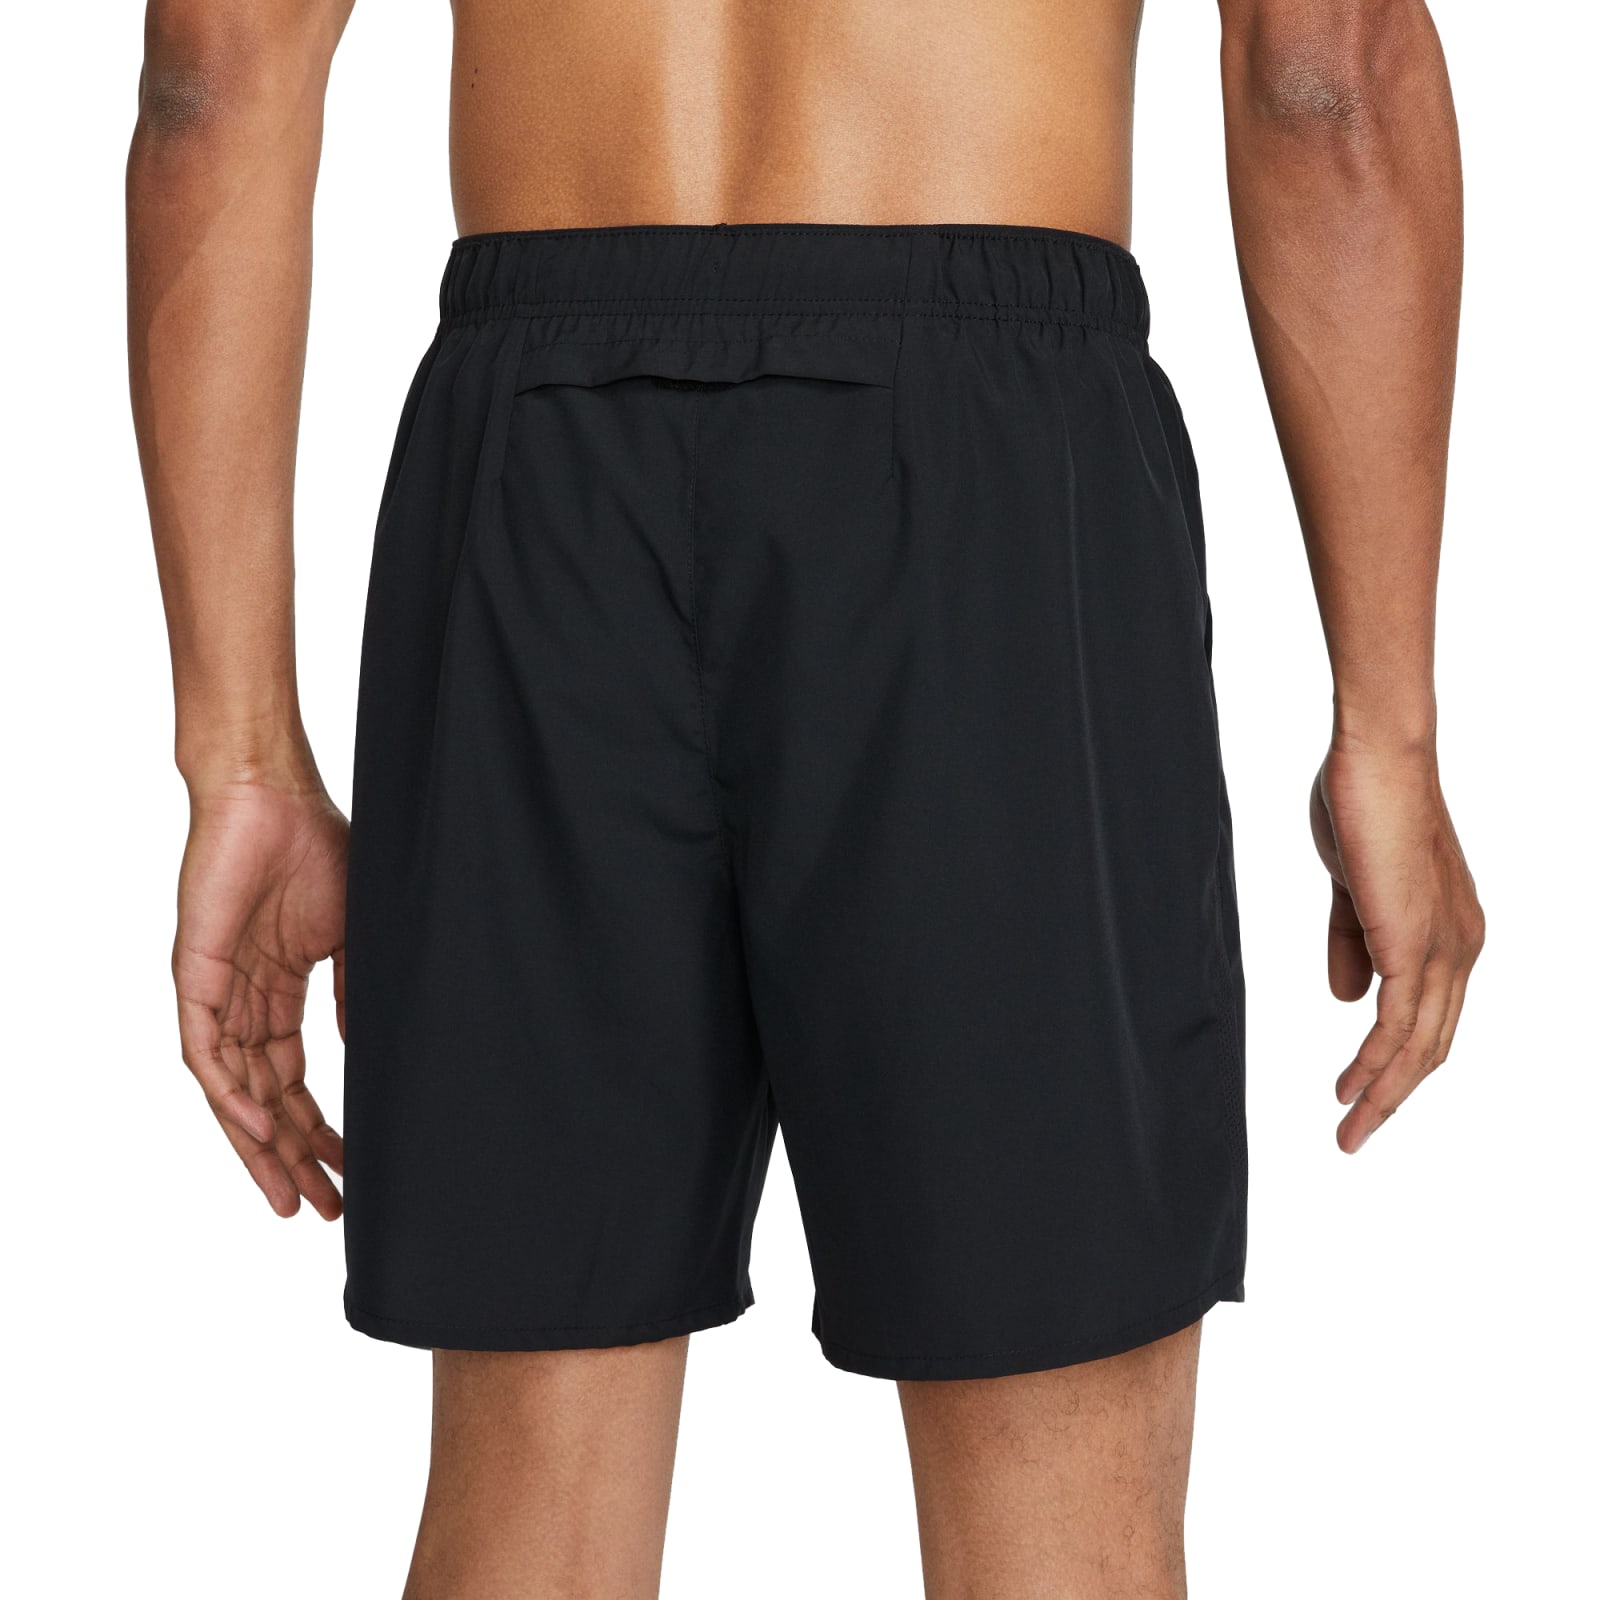 Rogue Nike Men's Fly Shorts 2.0 - Black